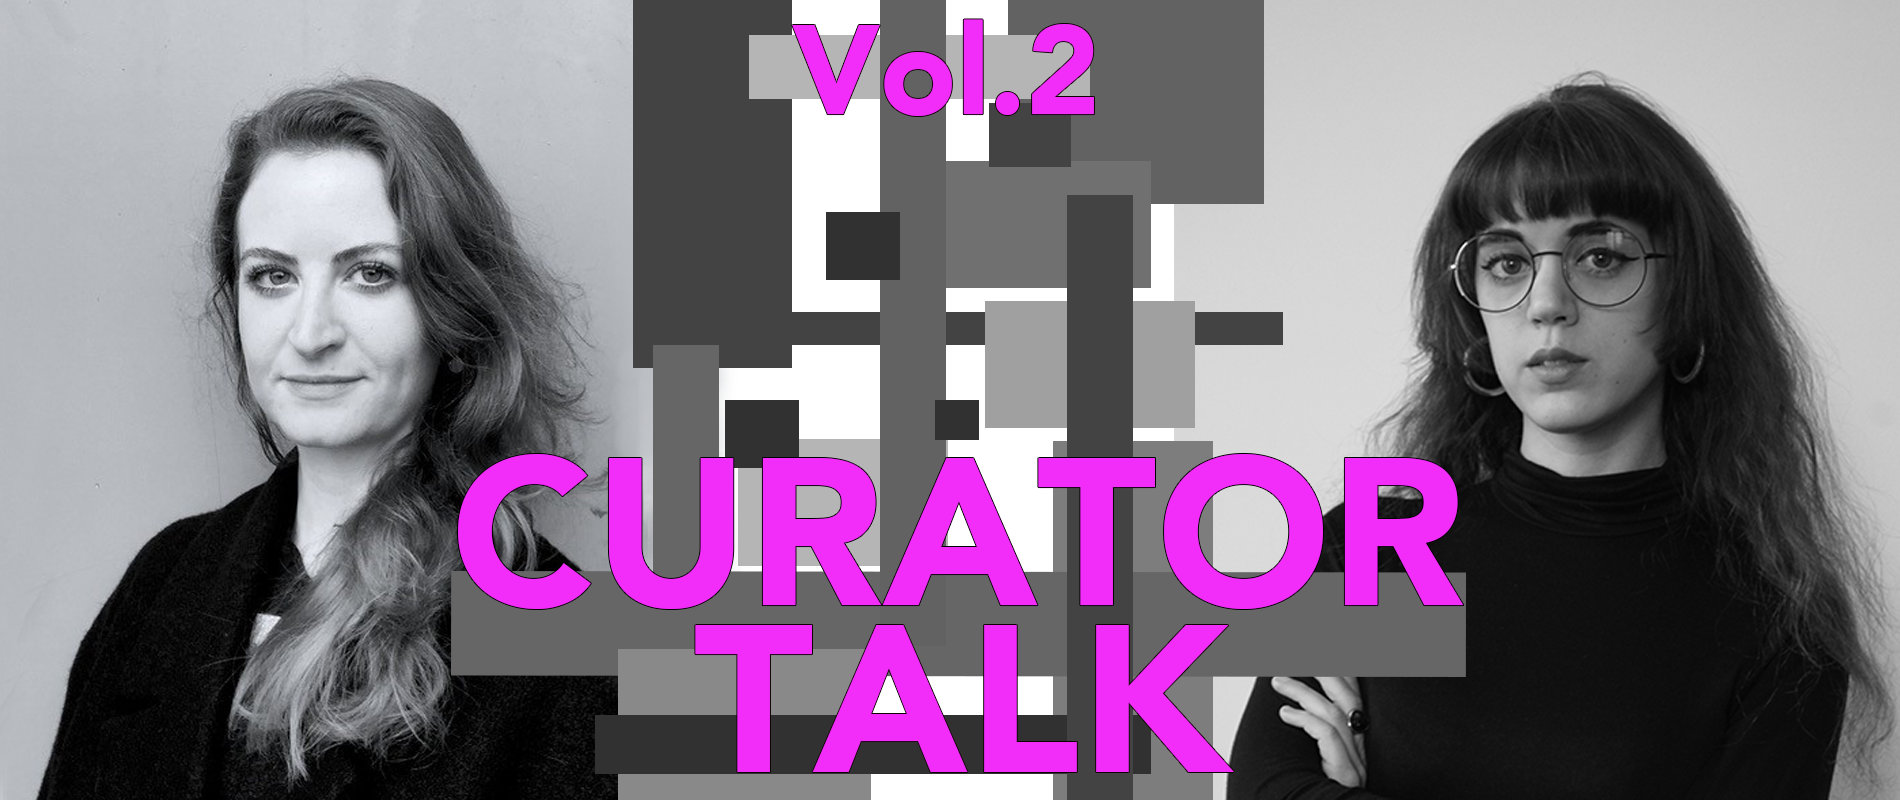 Curator Talk Vol.2